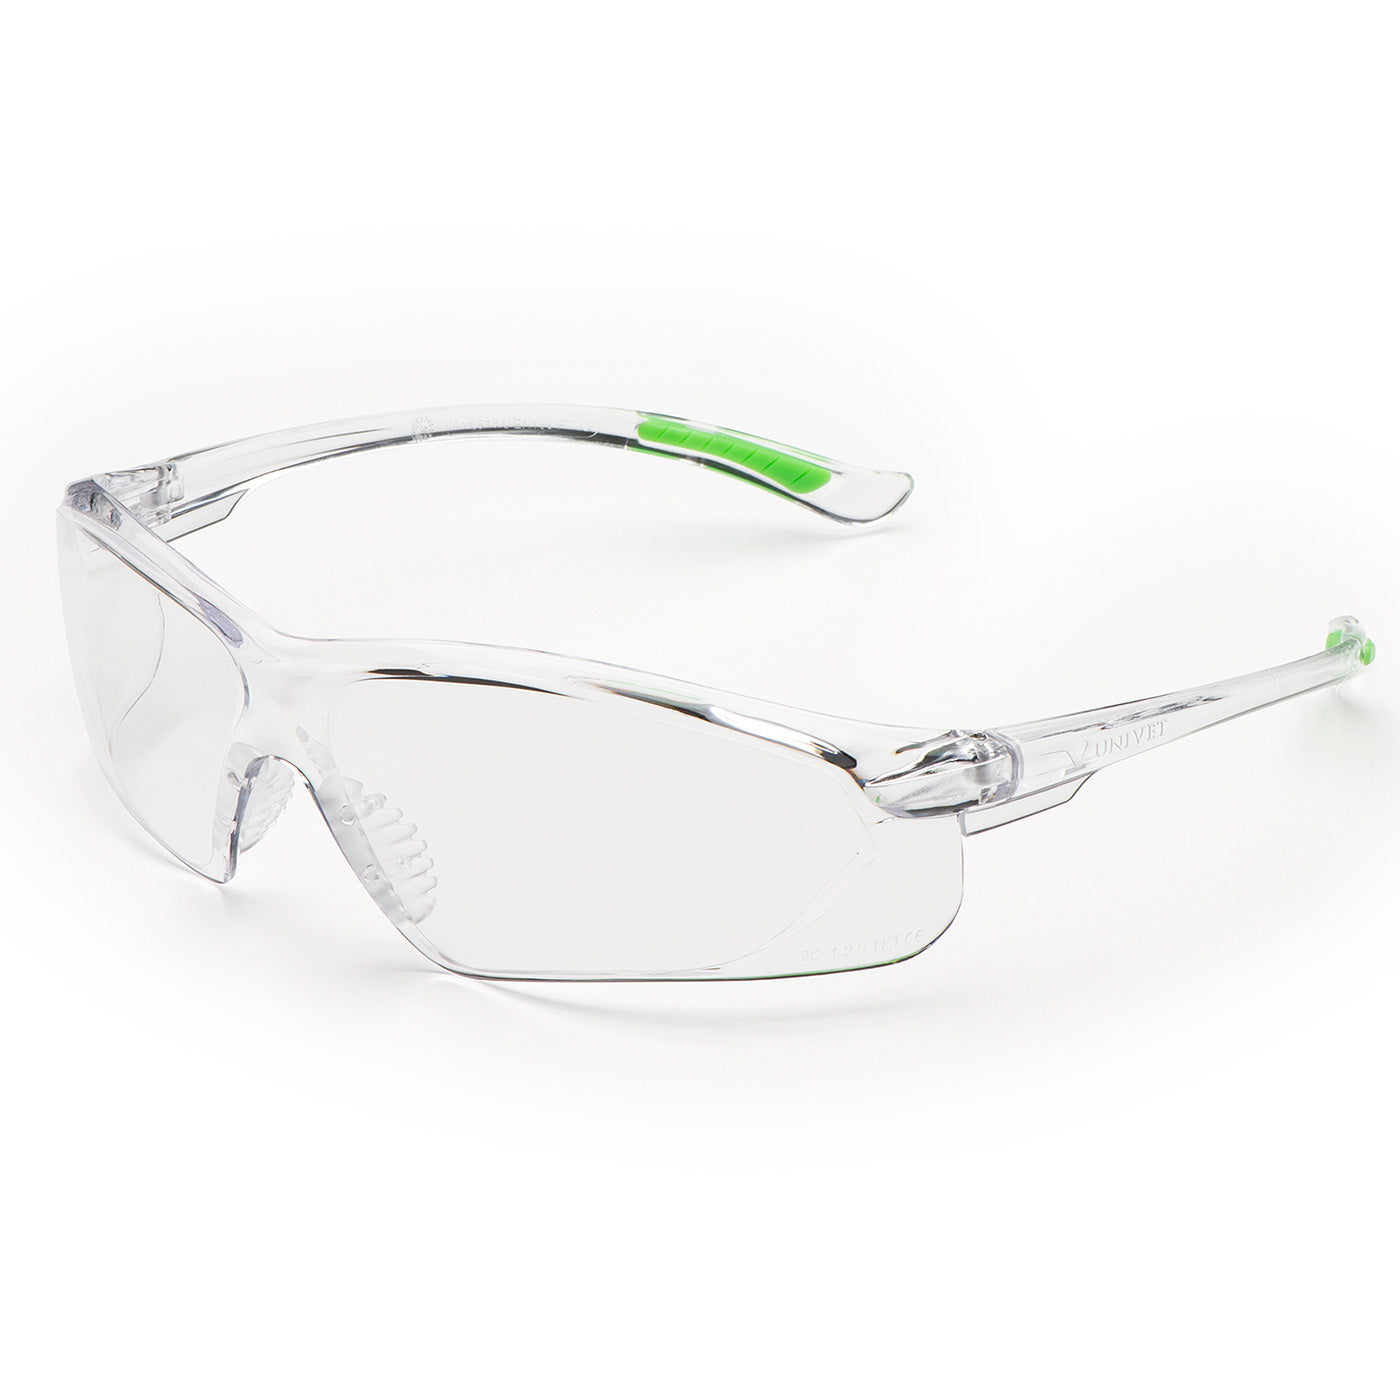 Univet 516 Clear Anti-Scratch Safety Glasses - 516.01.00.00